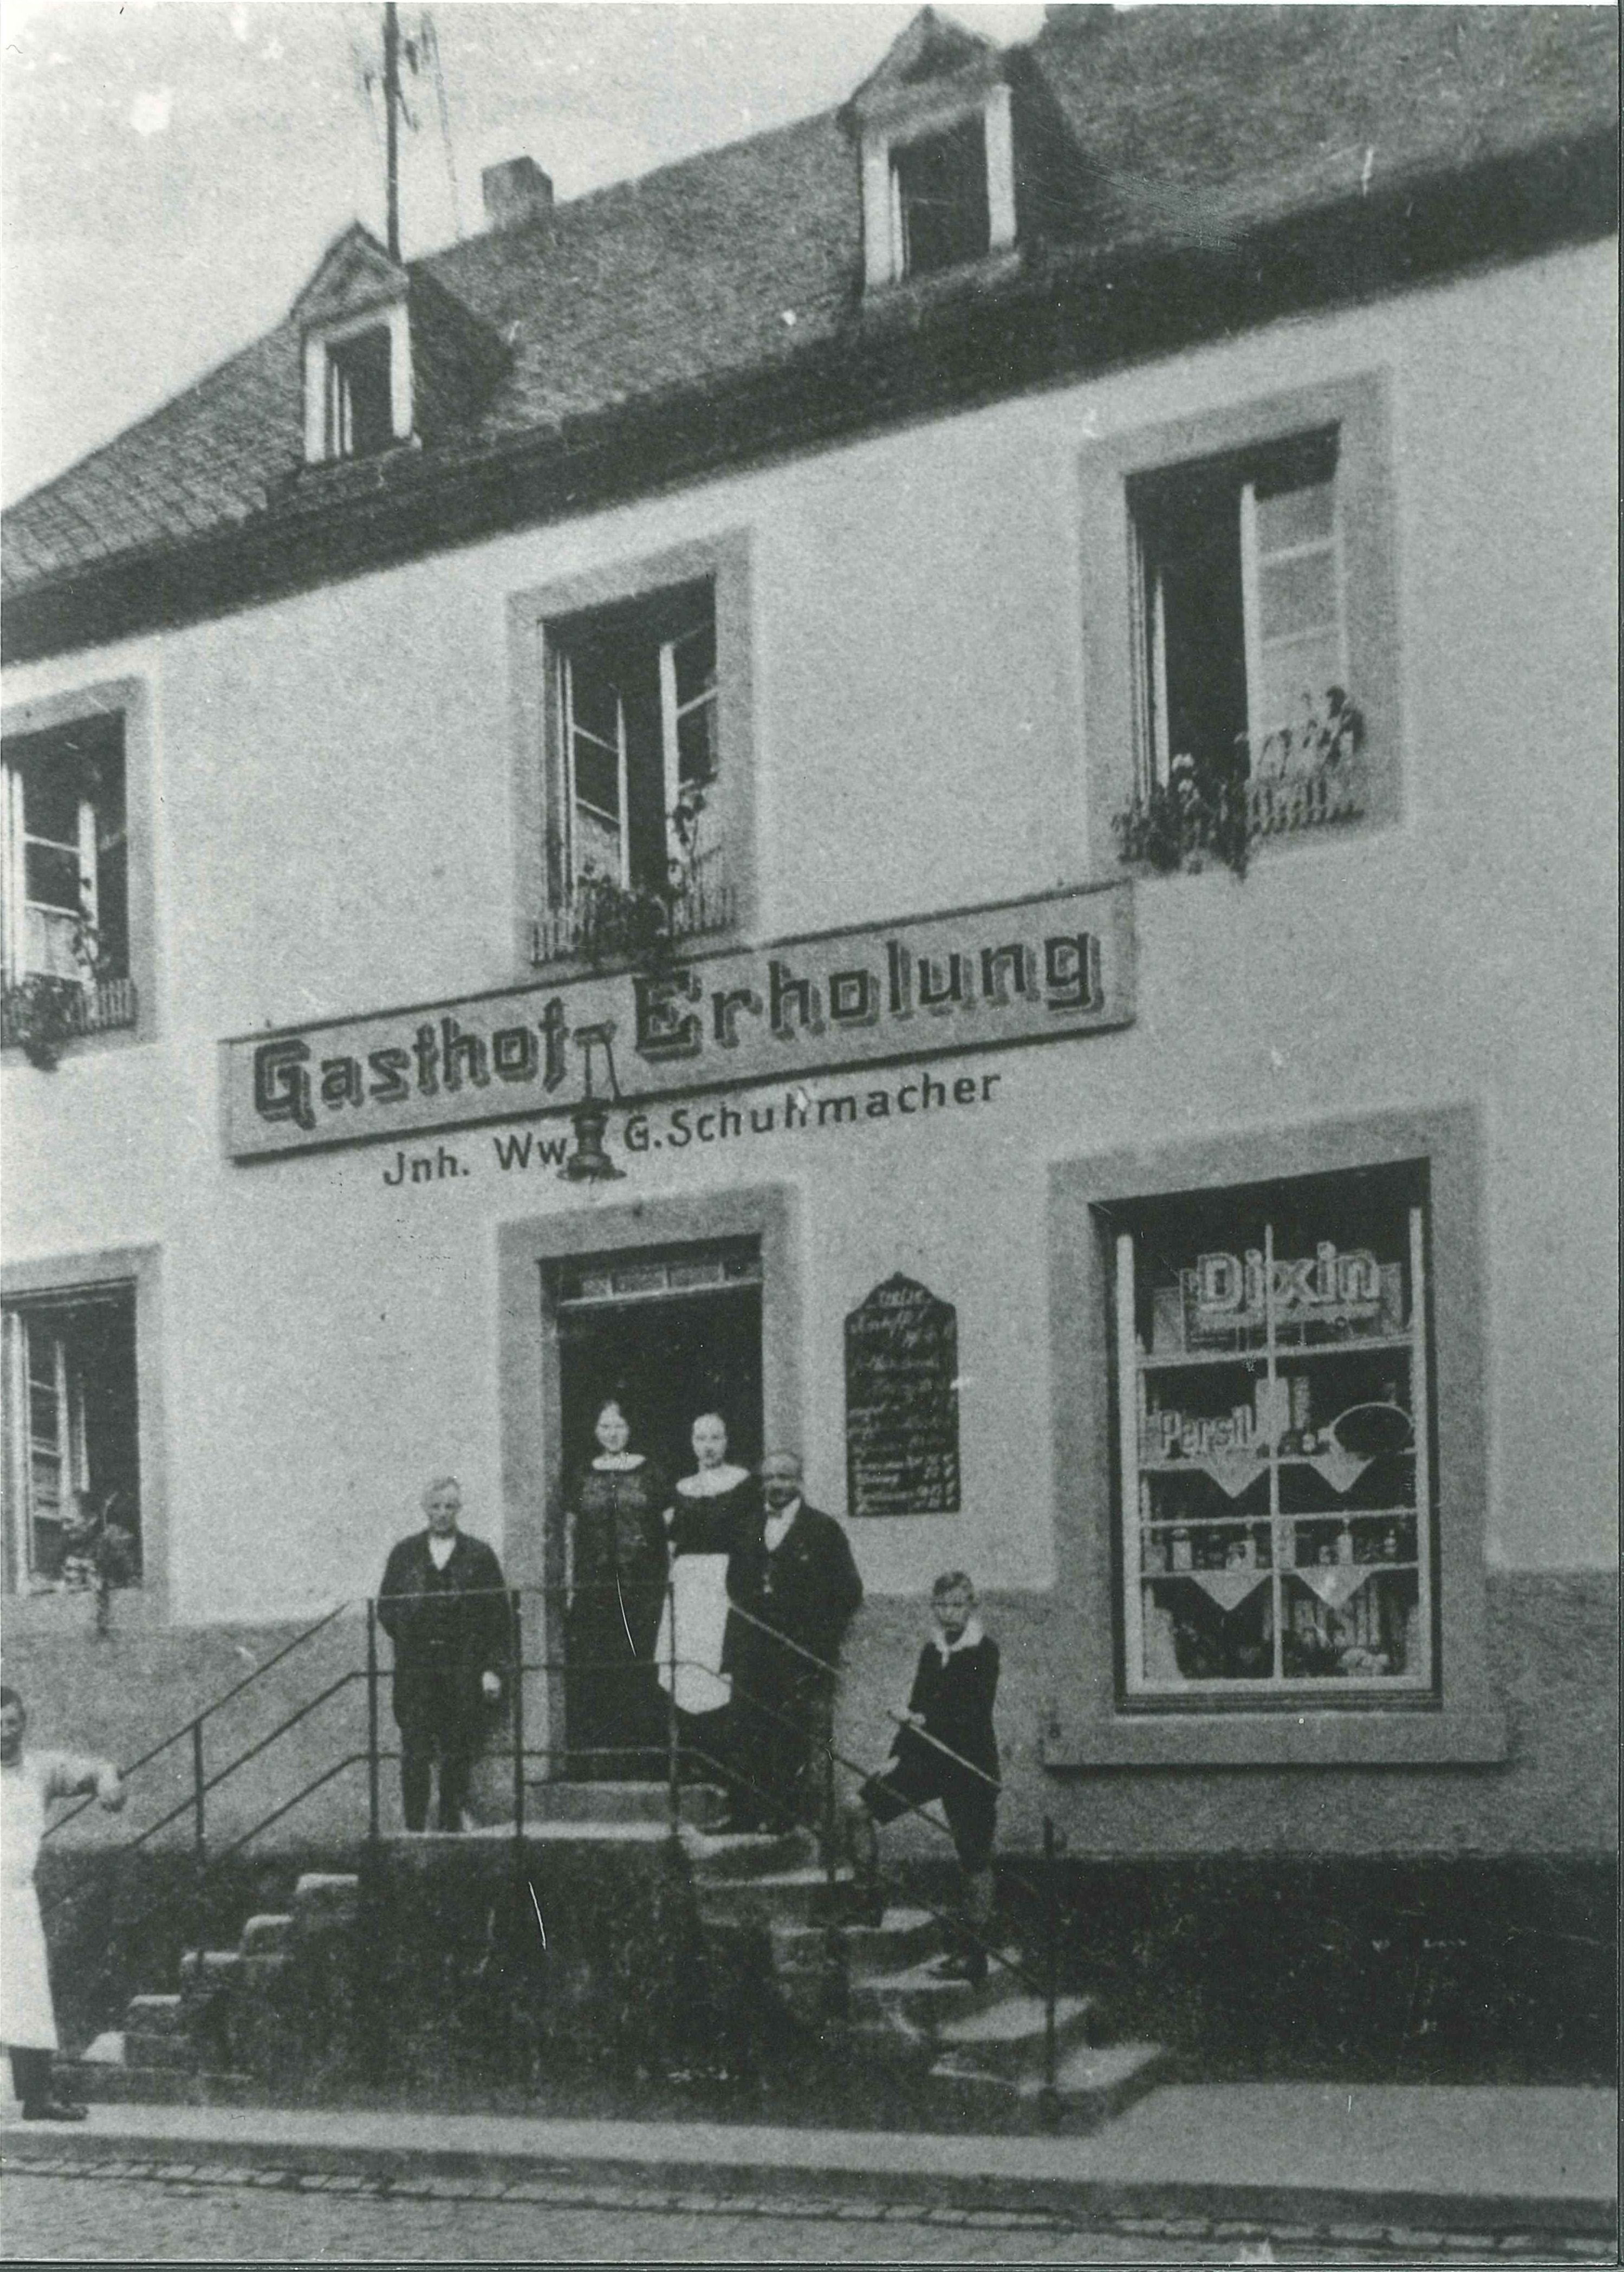 Gasthof "Erholung" in Bendorf, 1930 (REM CC BY-NC-SA)